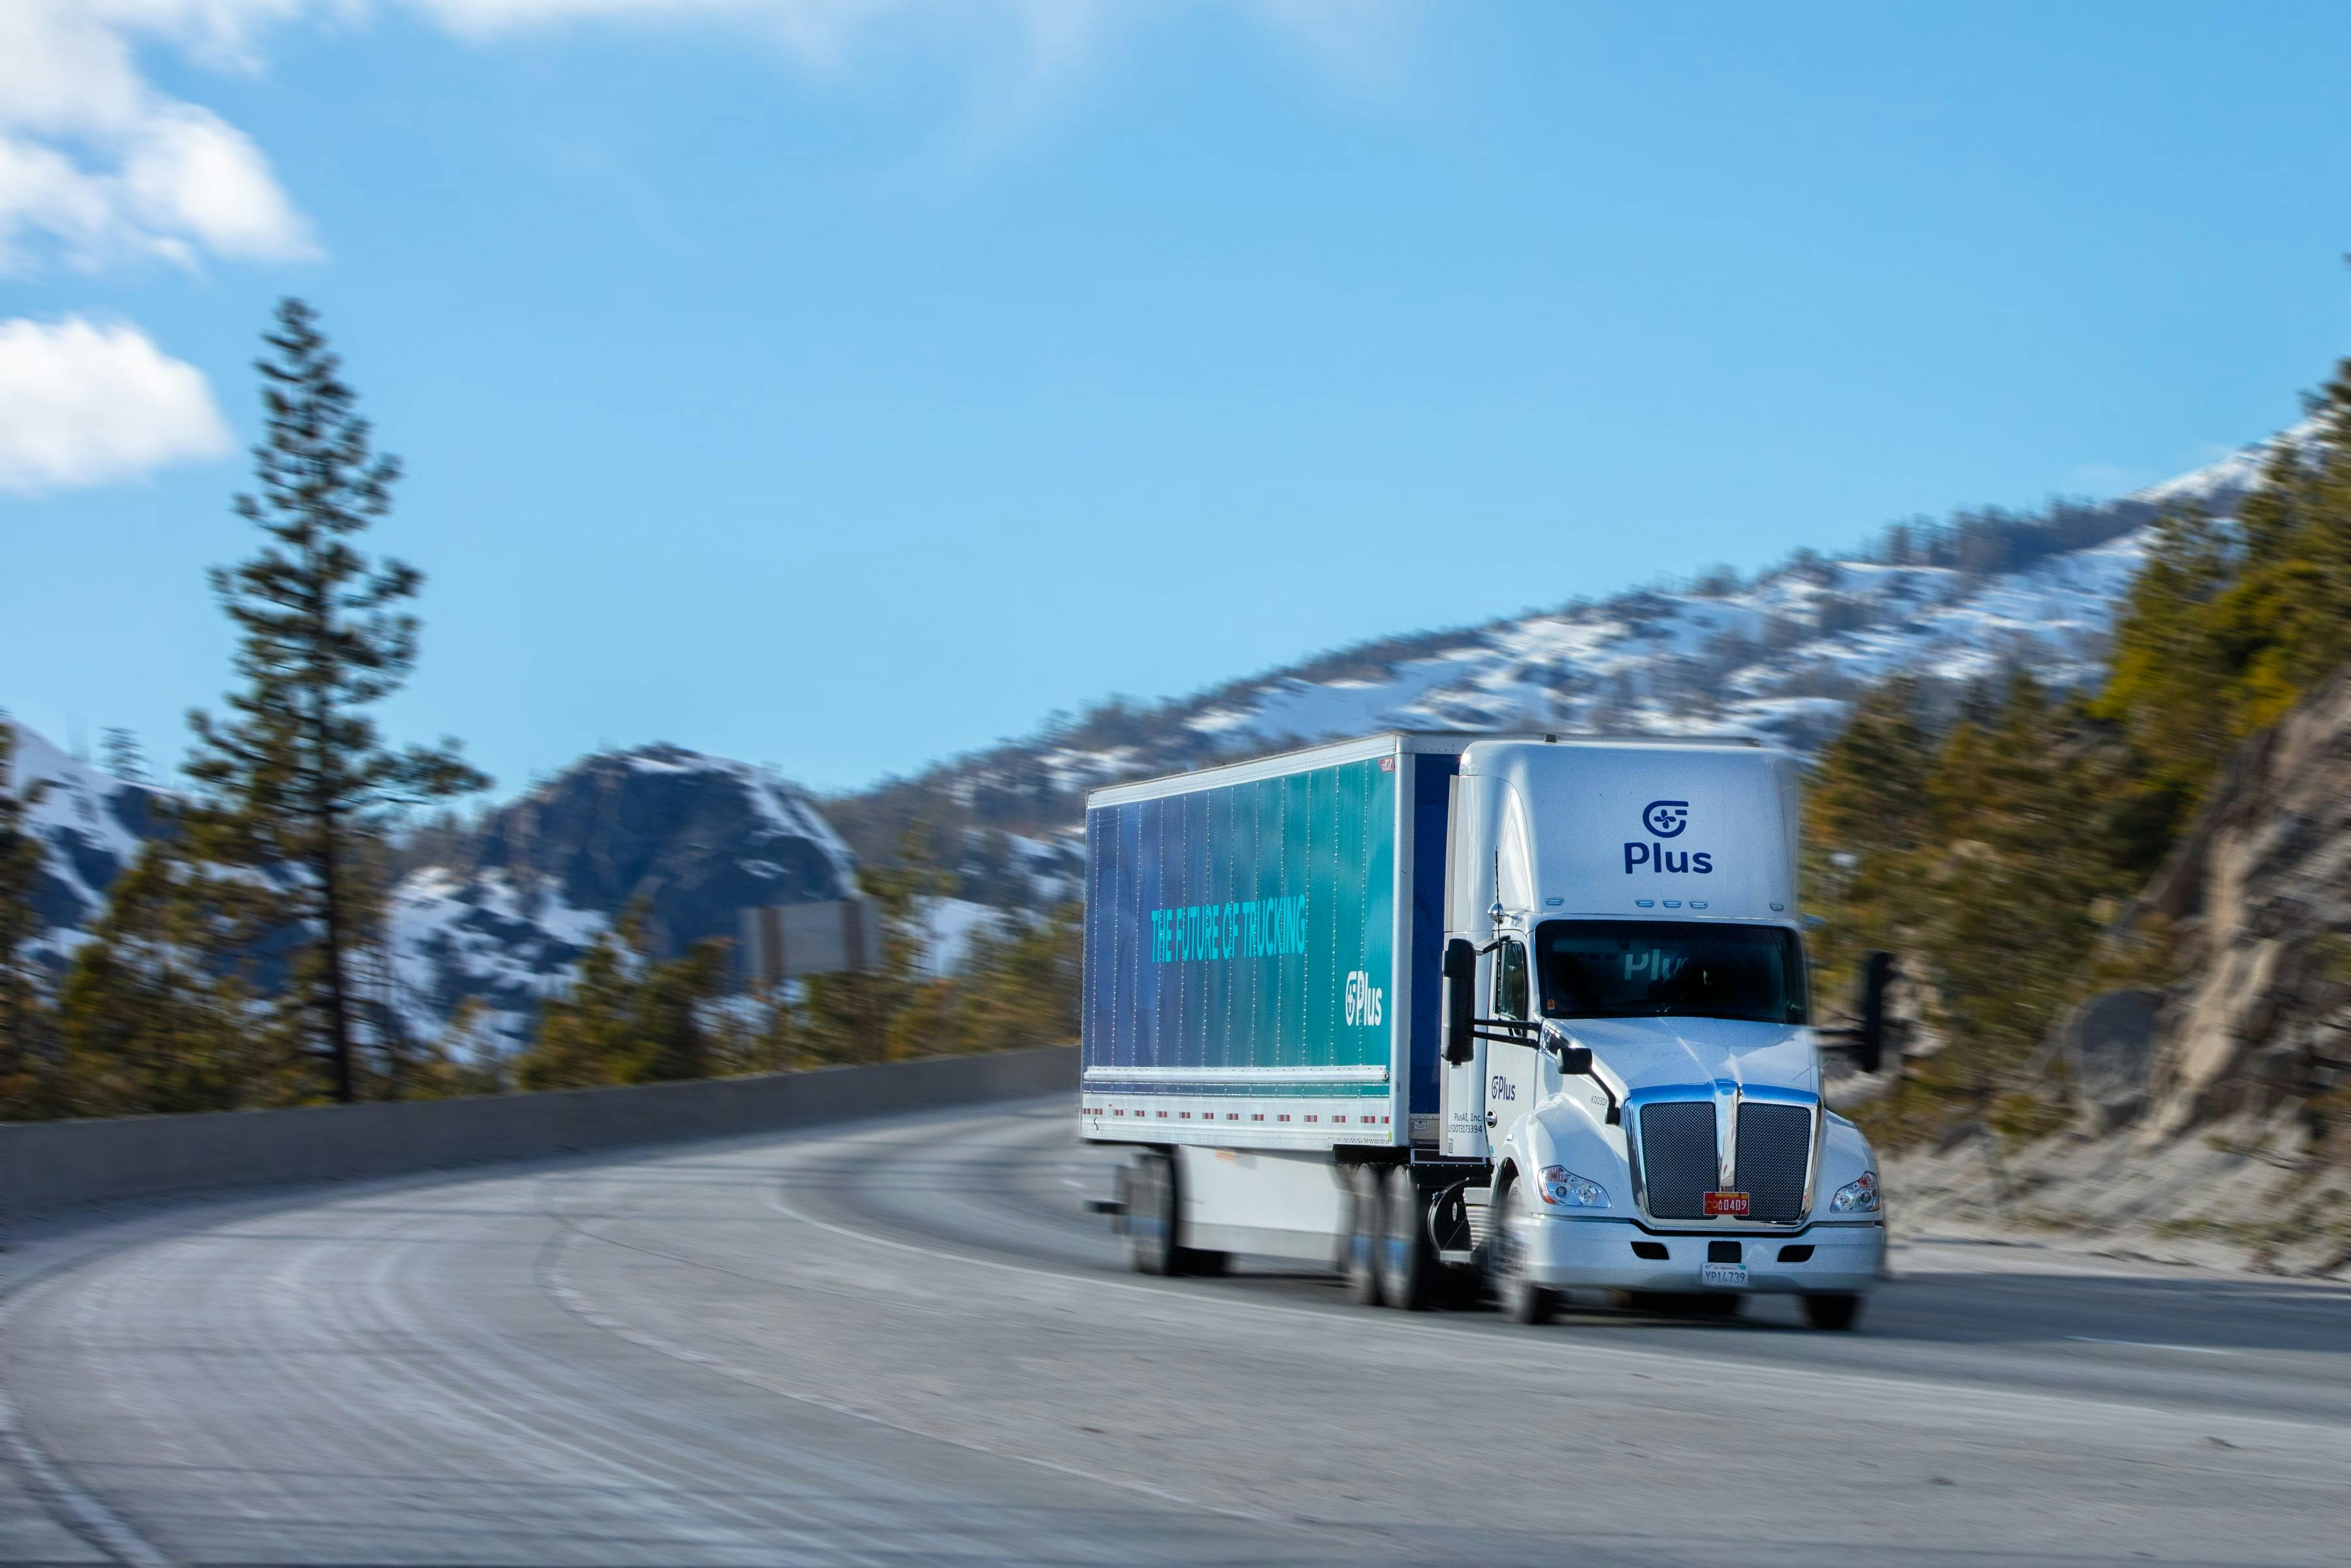 Plus AI truck on highway through snowy mountains